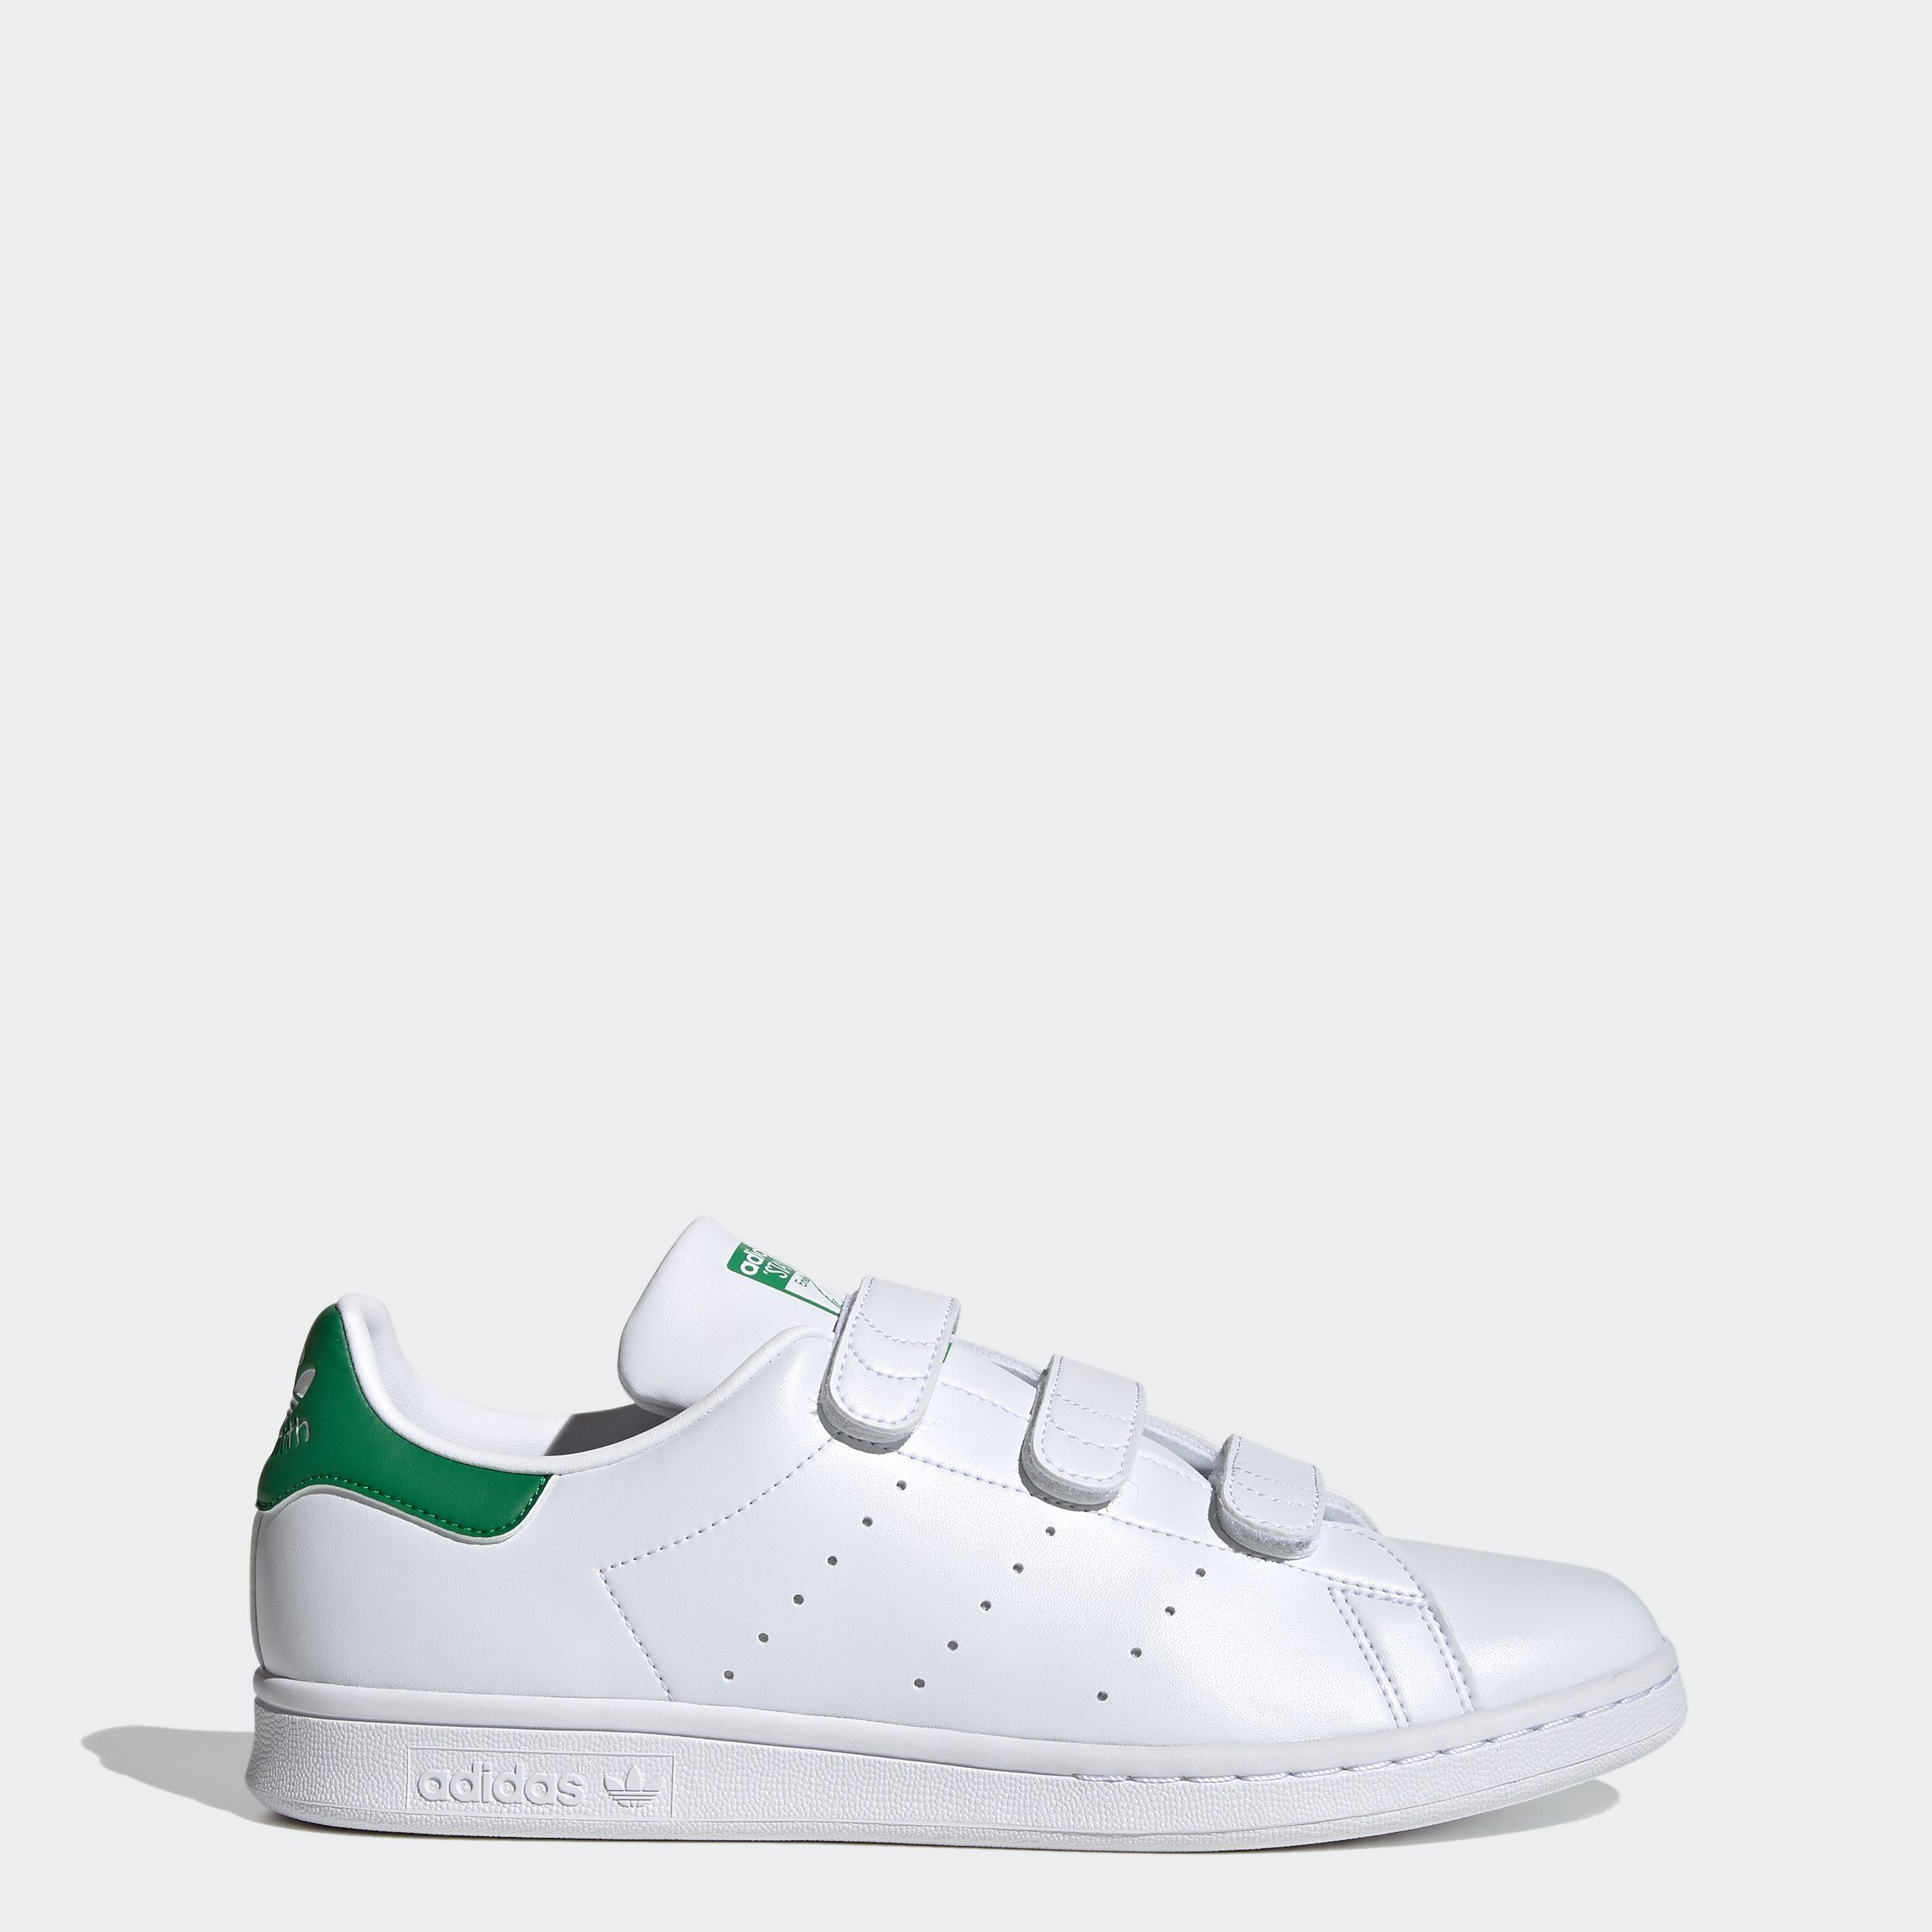 SMITH White Sneaker White Cloud Green adidas STAN Originals / / Cloud